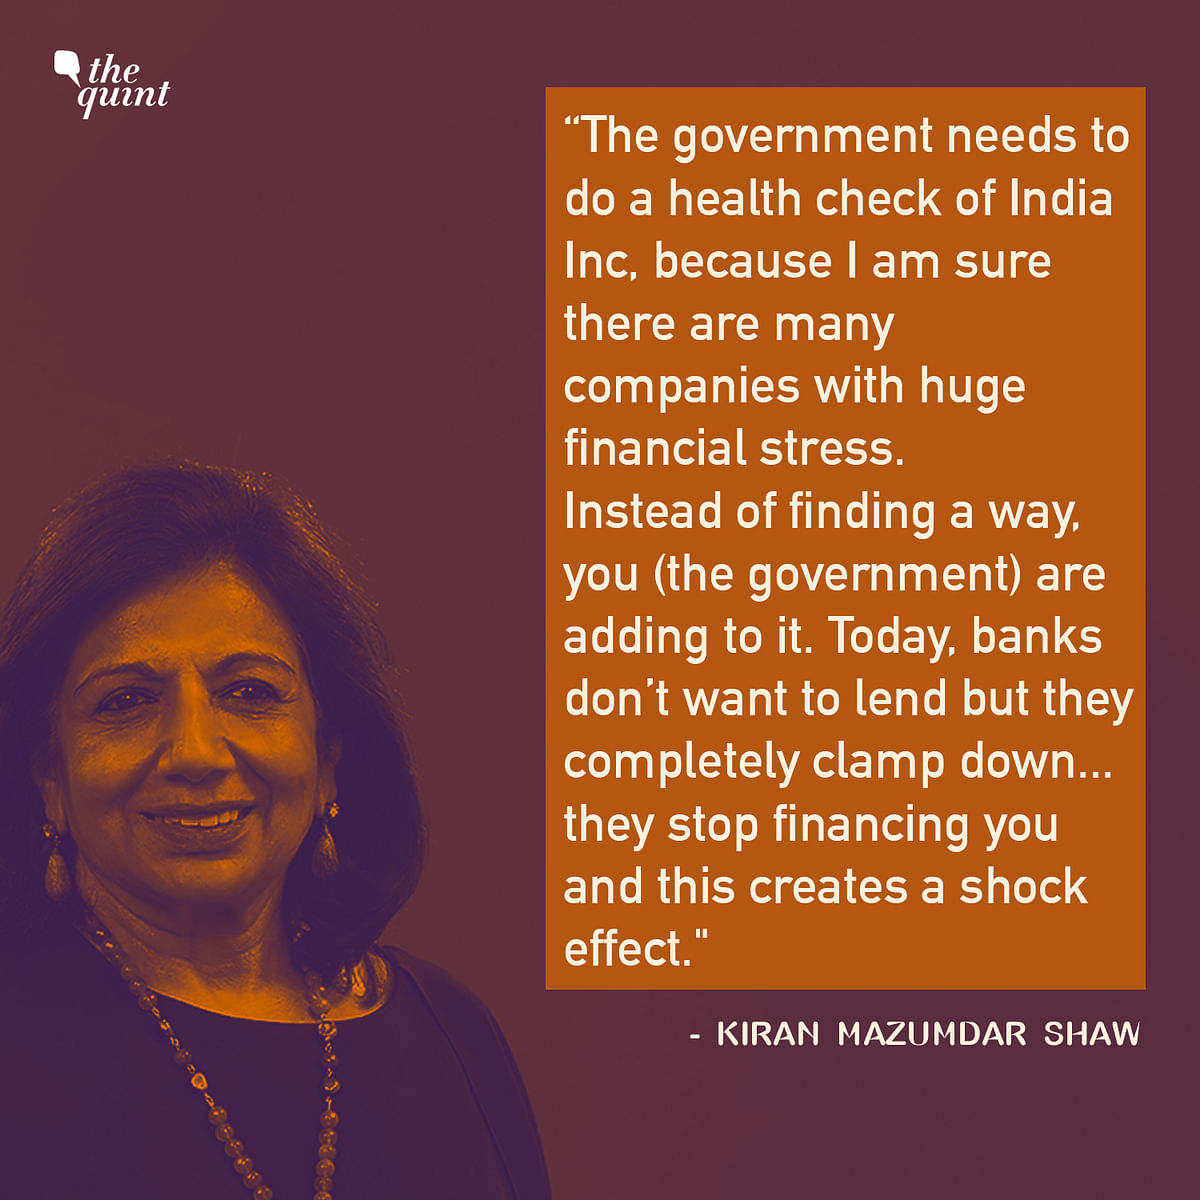 Kiran Mazumdar Shaw said the government needs to do a health check of India Inc.